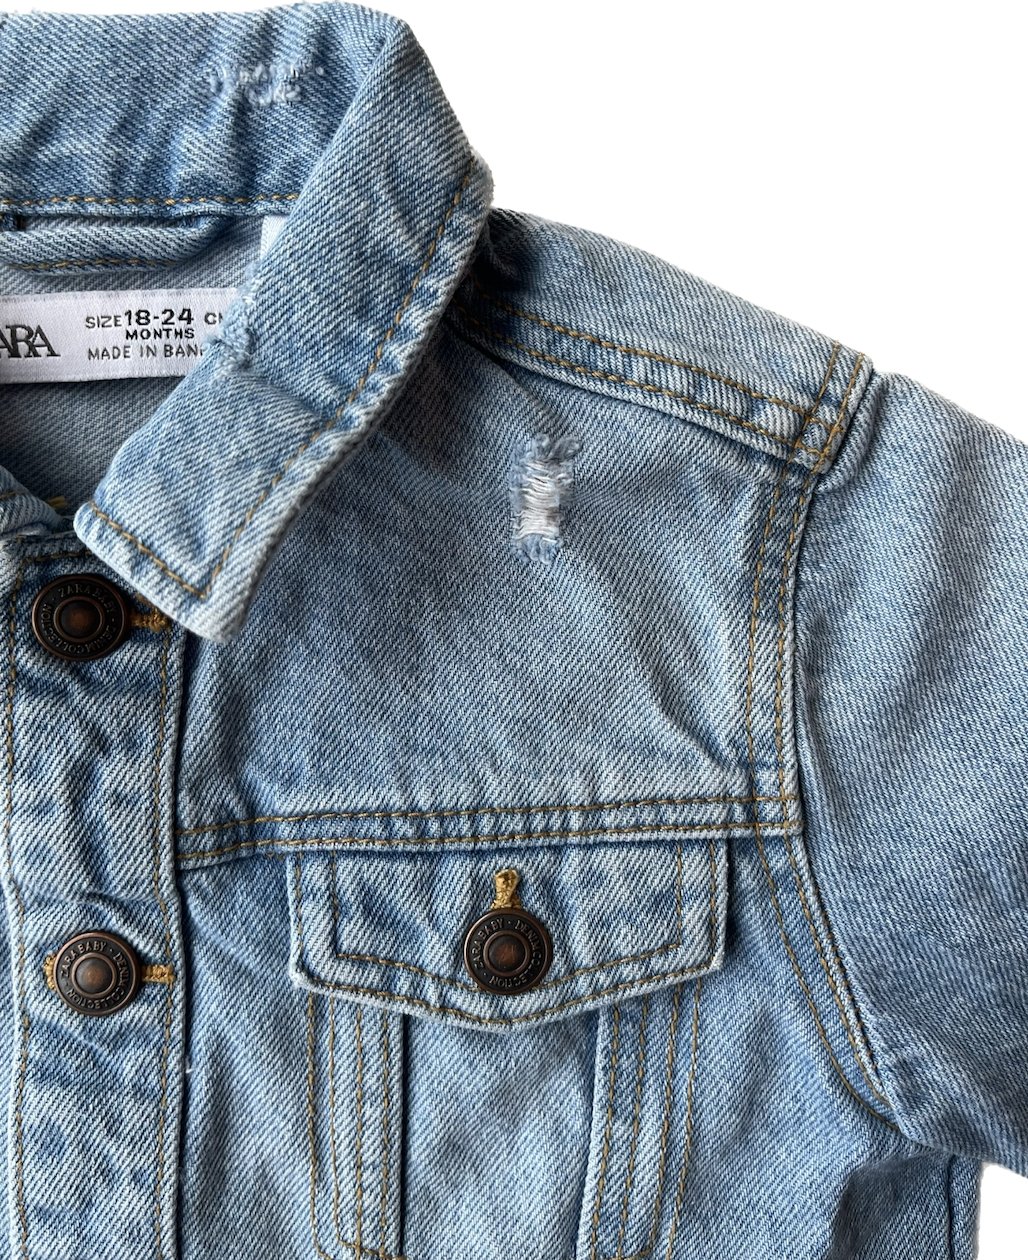 Zara | Jackets & Coats | Zara Gingham Laced Distressed Womens Denim Jacket  Medium | Poshmark